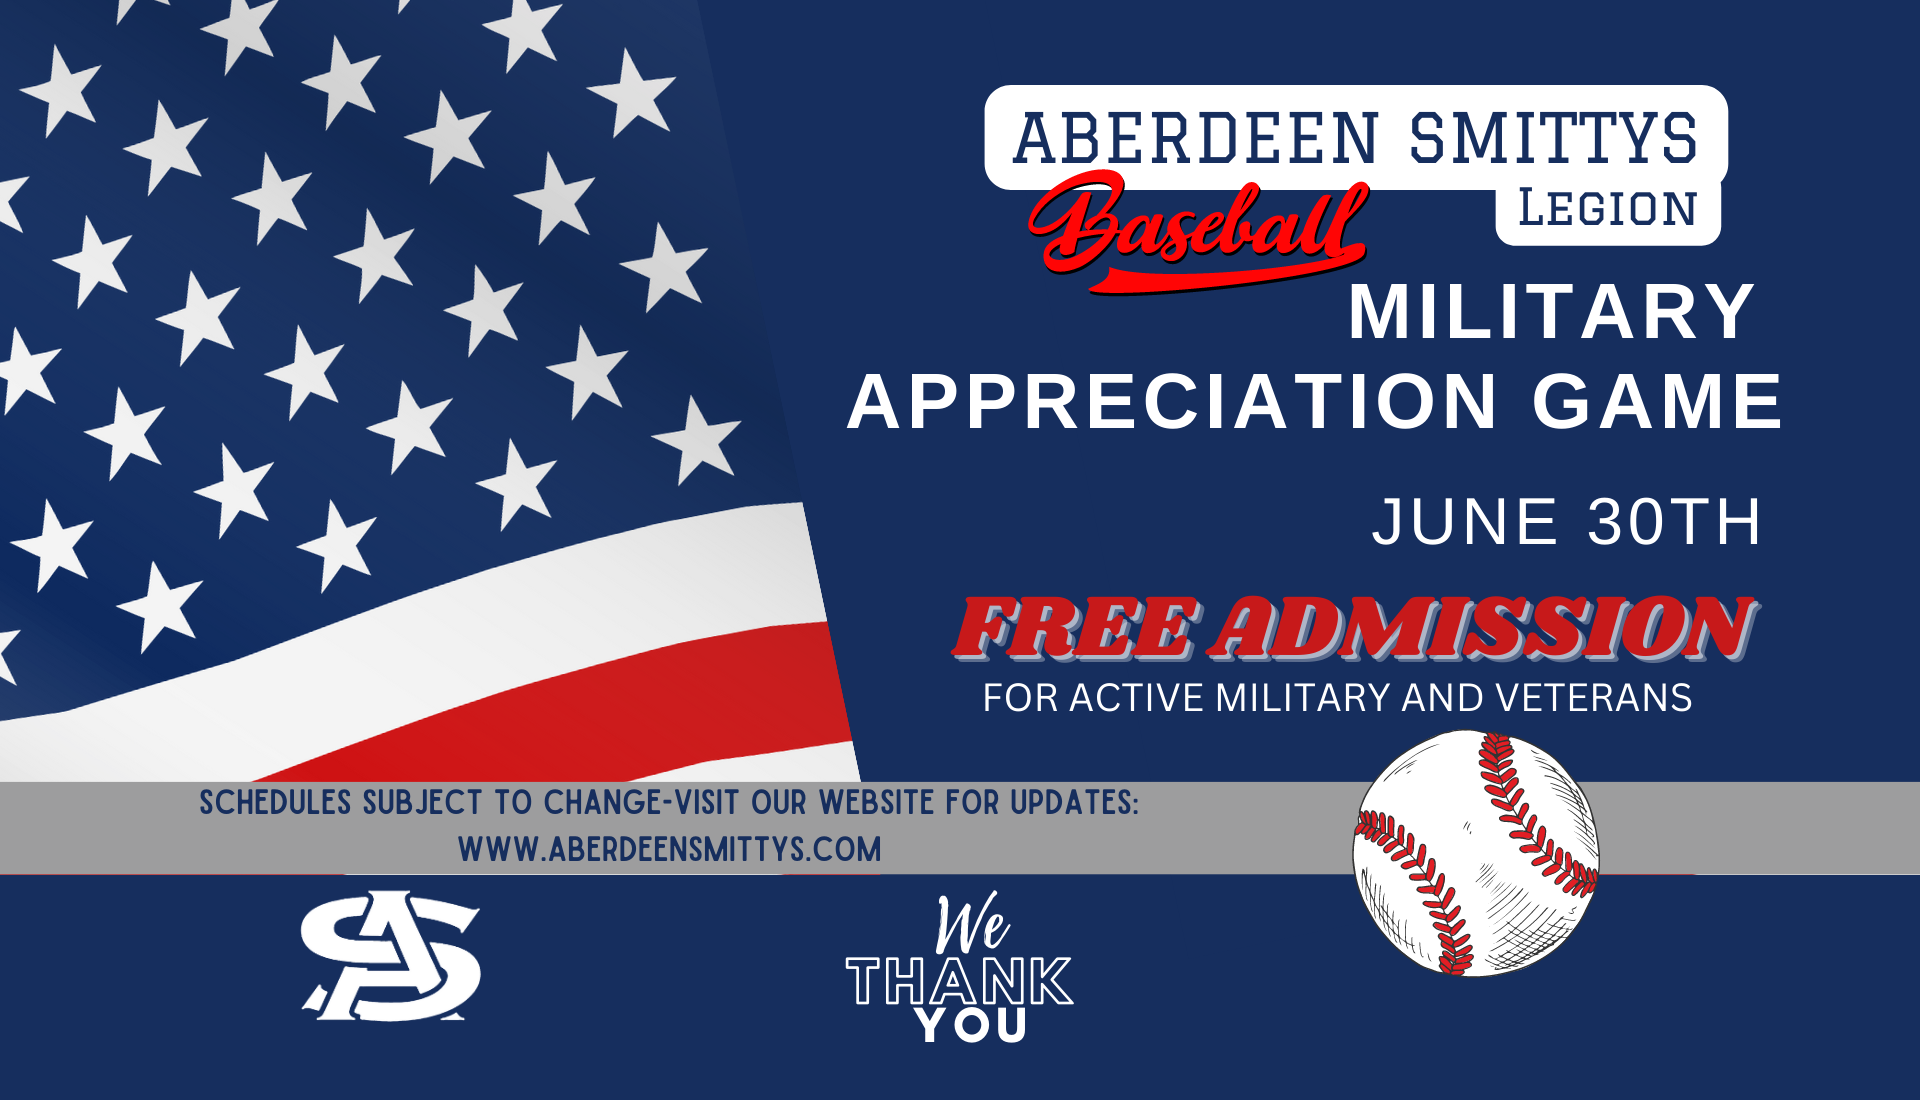 aberdeen-smittys-legion-baseball-military-appreciation-aberdeen